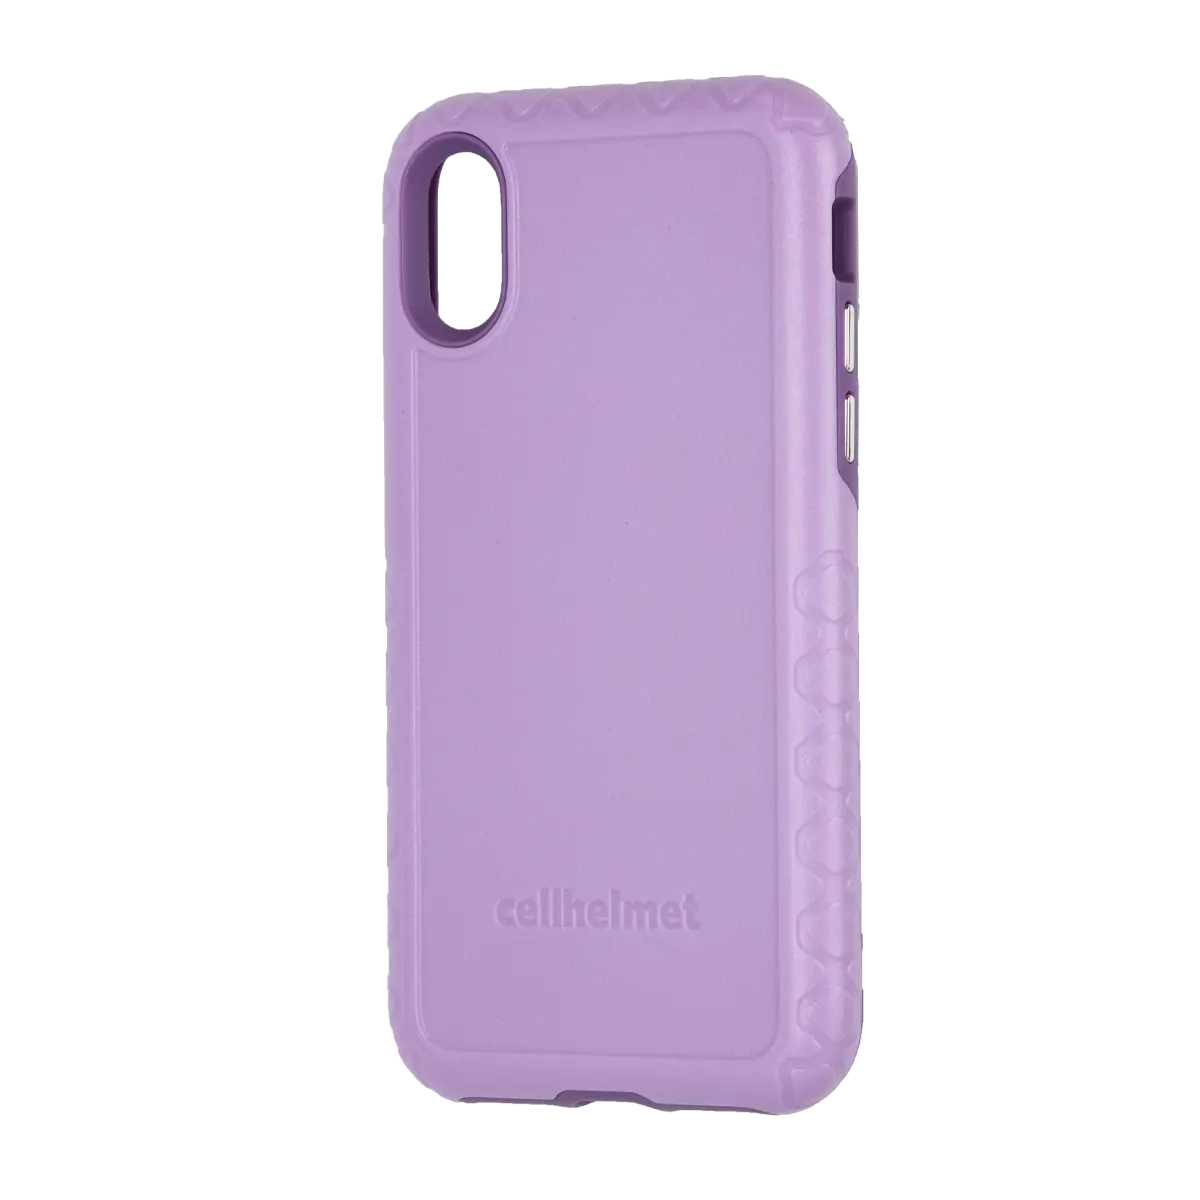 cellhelmet Purple Custom Case for iPhone XS